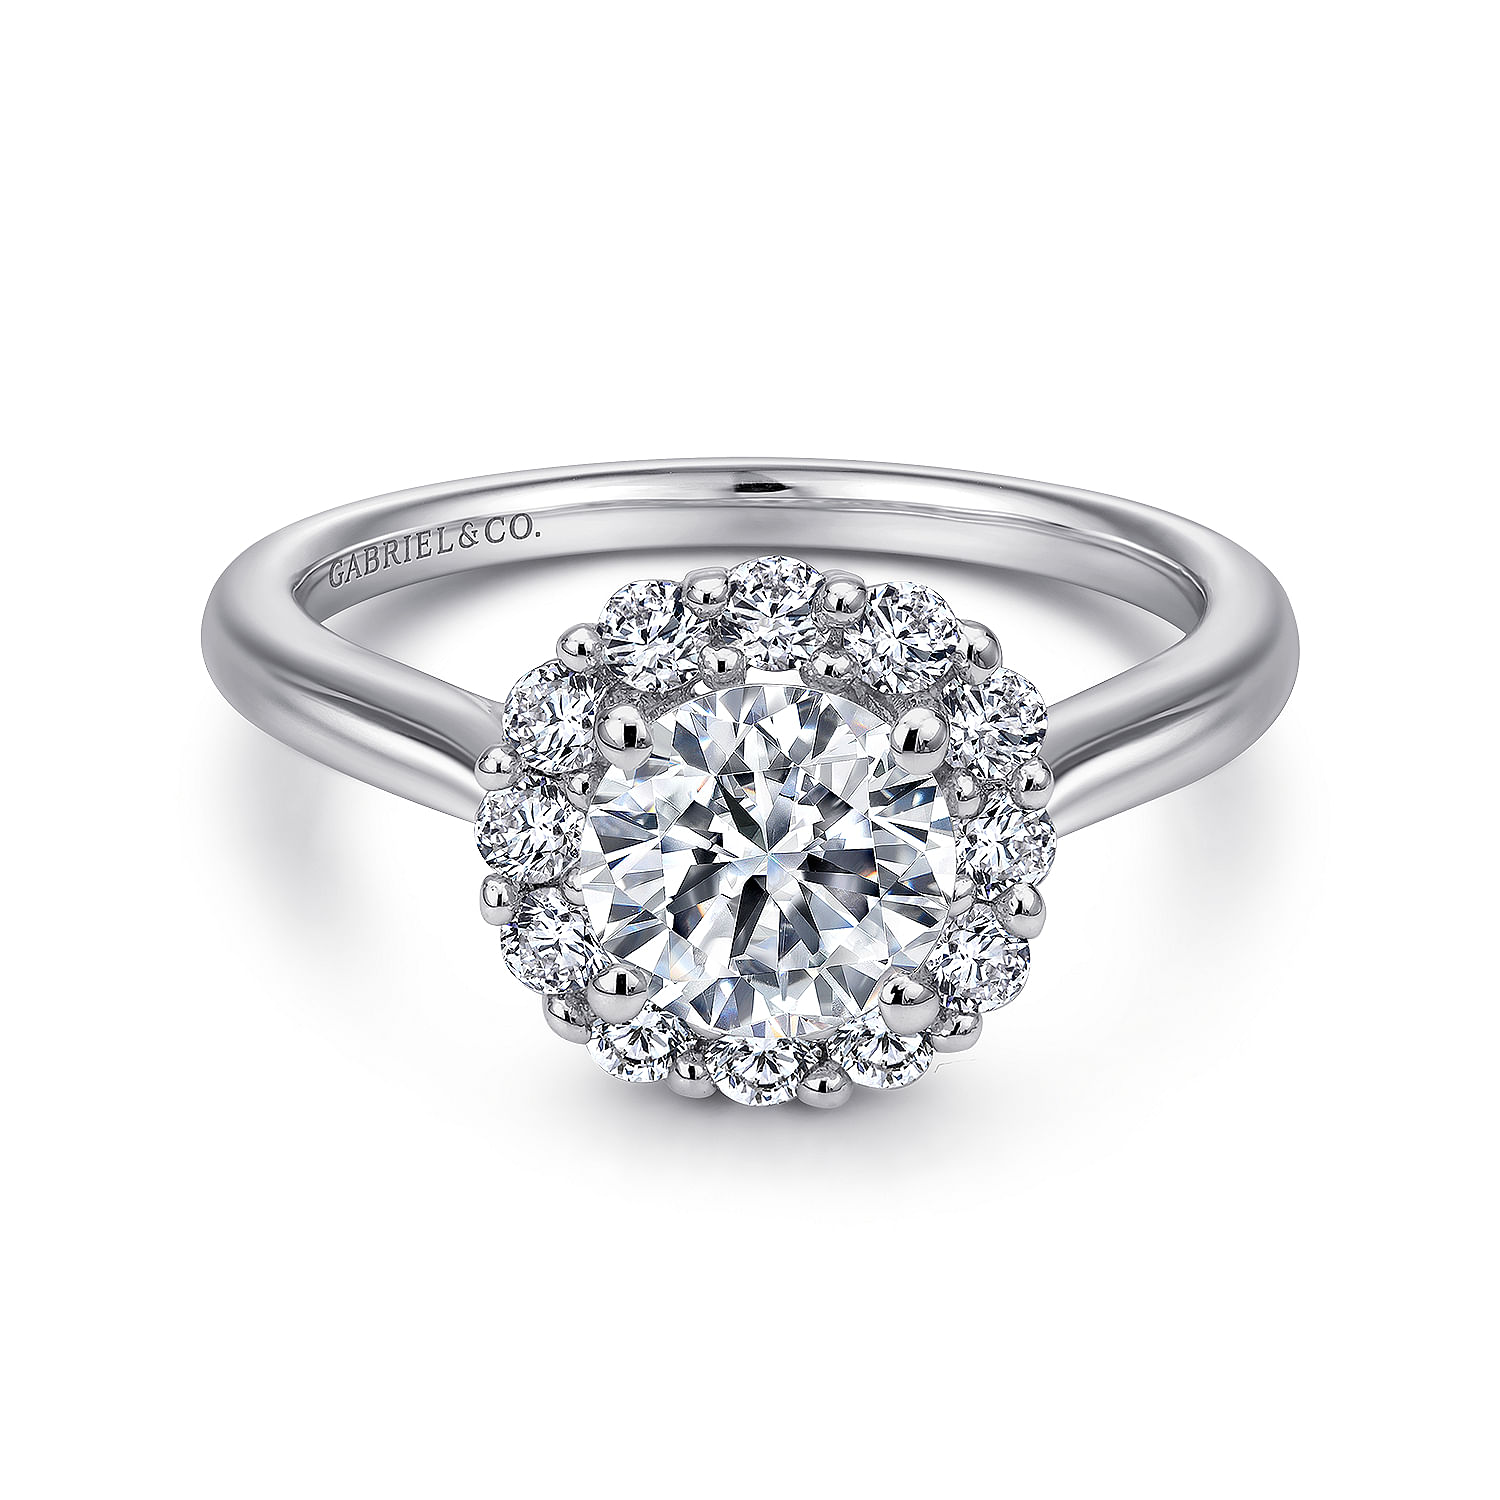 Althea - 14K White Gold Round Halo Diamond Engagement Ring